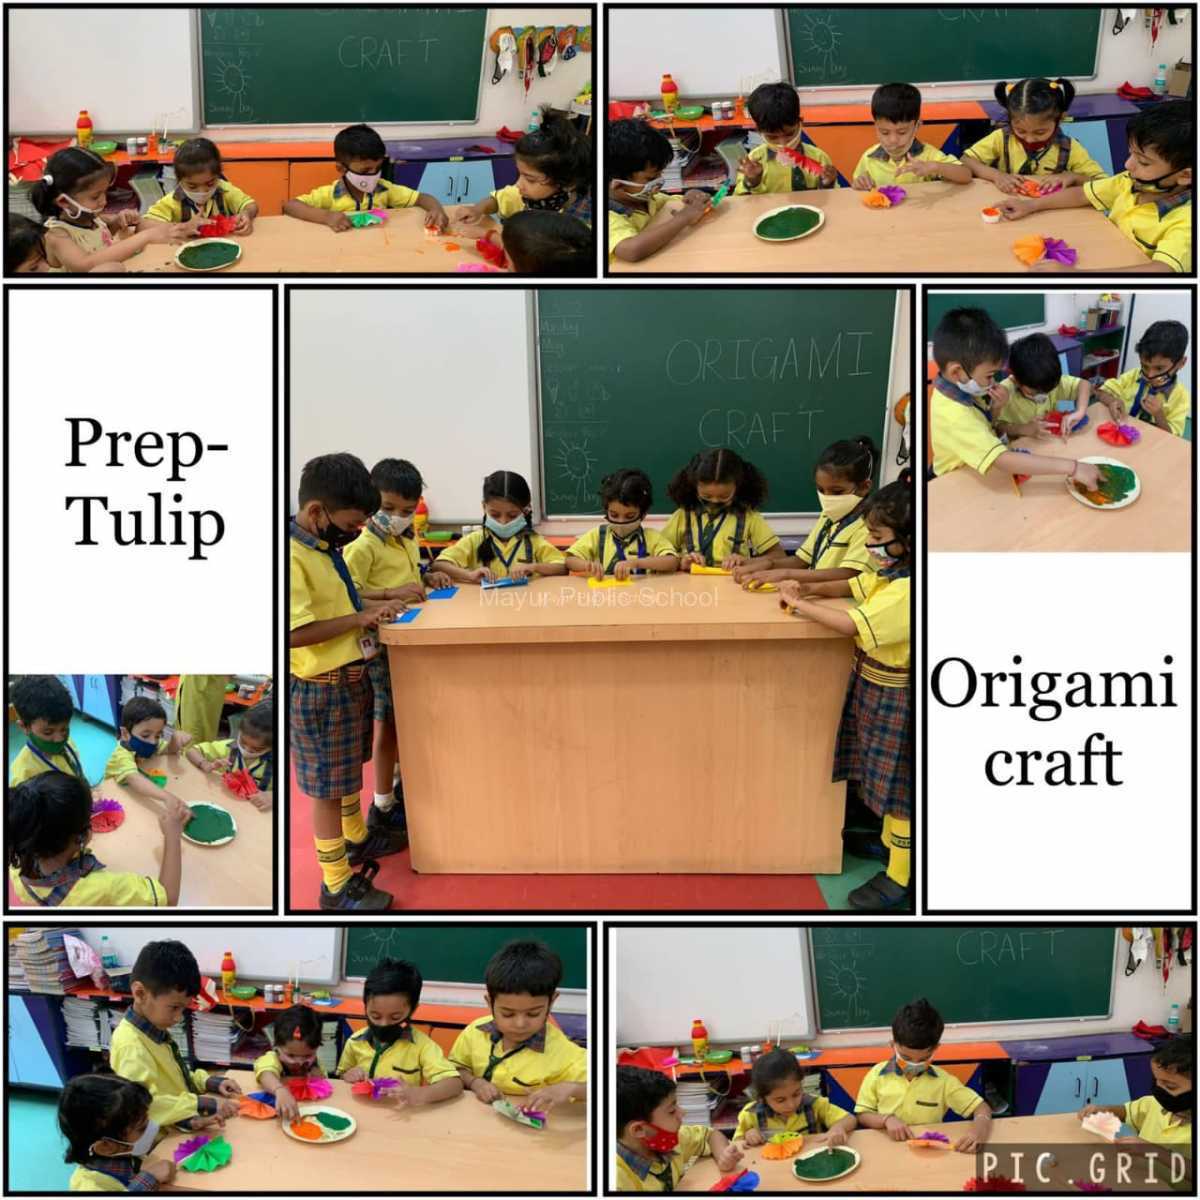 Crafts-mayur-public-school-karan-2